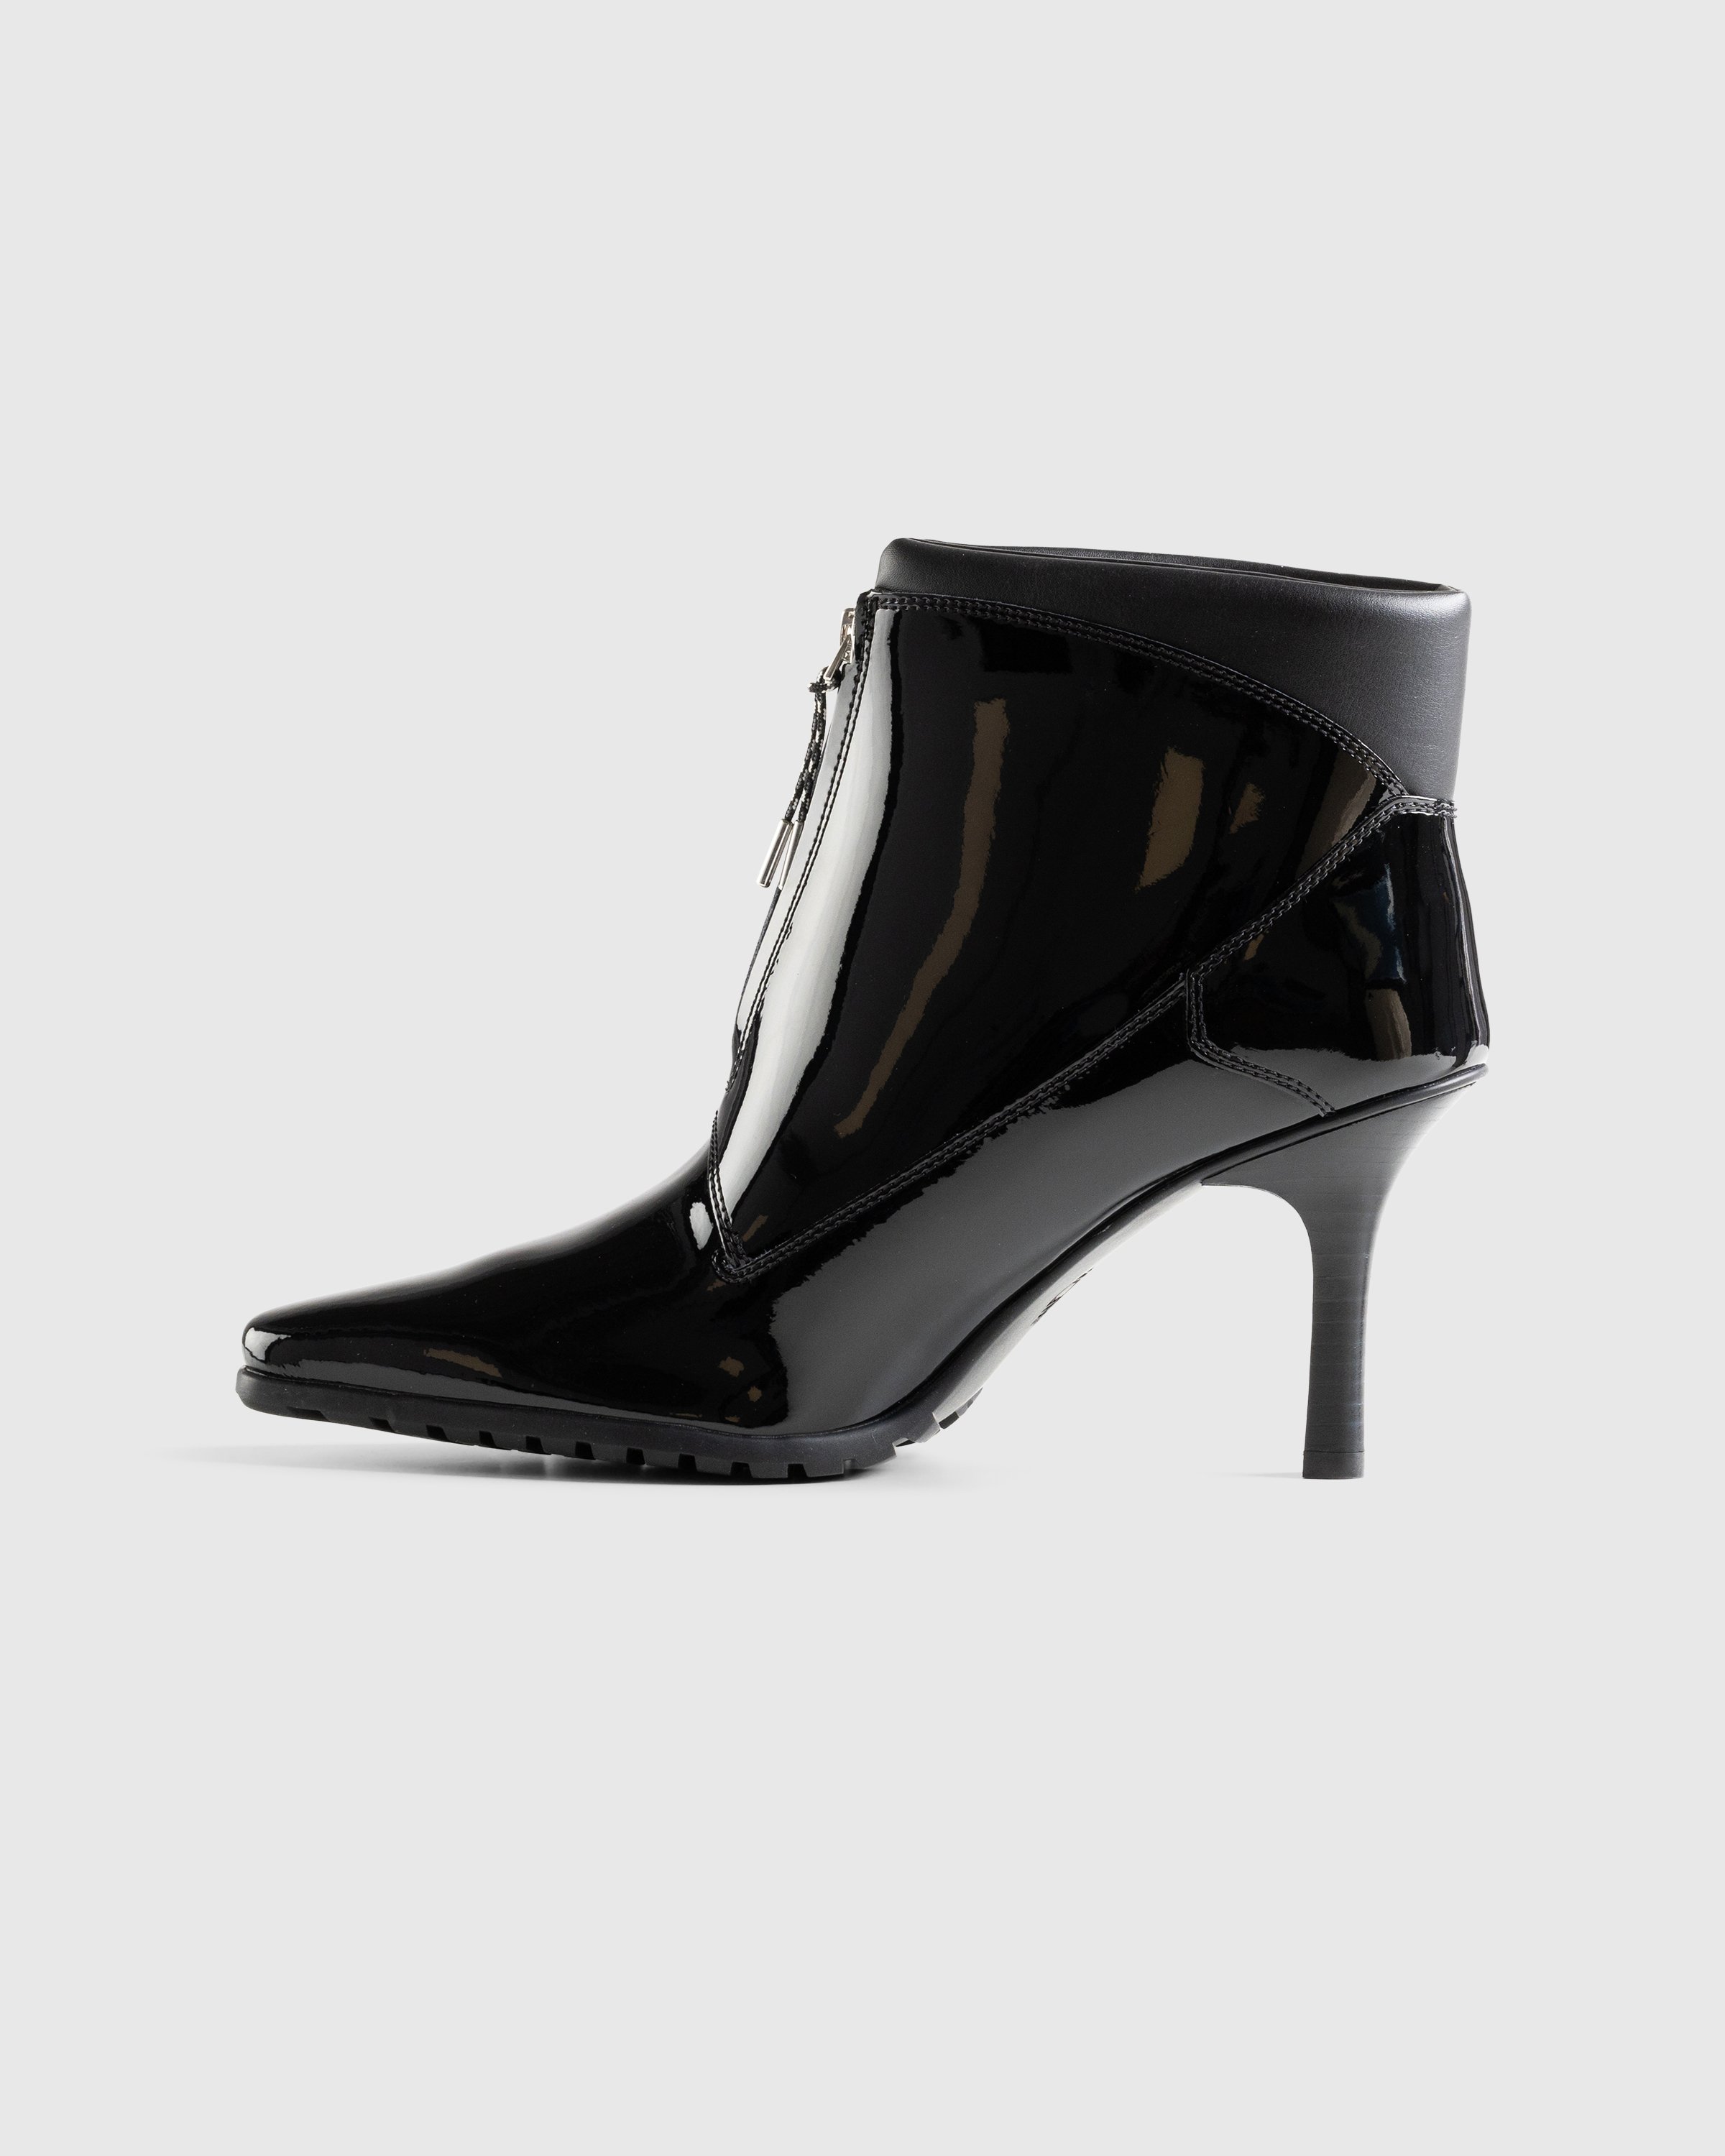 Veneda Carter x Timberland - MID ZIP UP BOOT BLACK PATENT LEATHER - Footwear - Black - Image 2